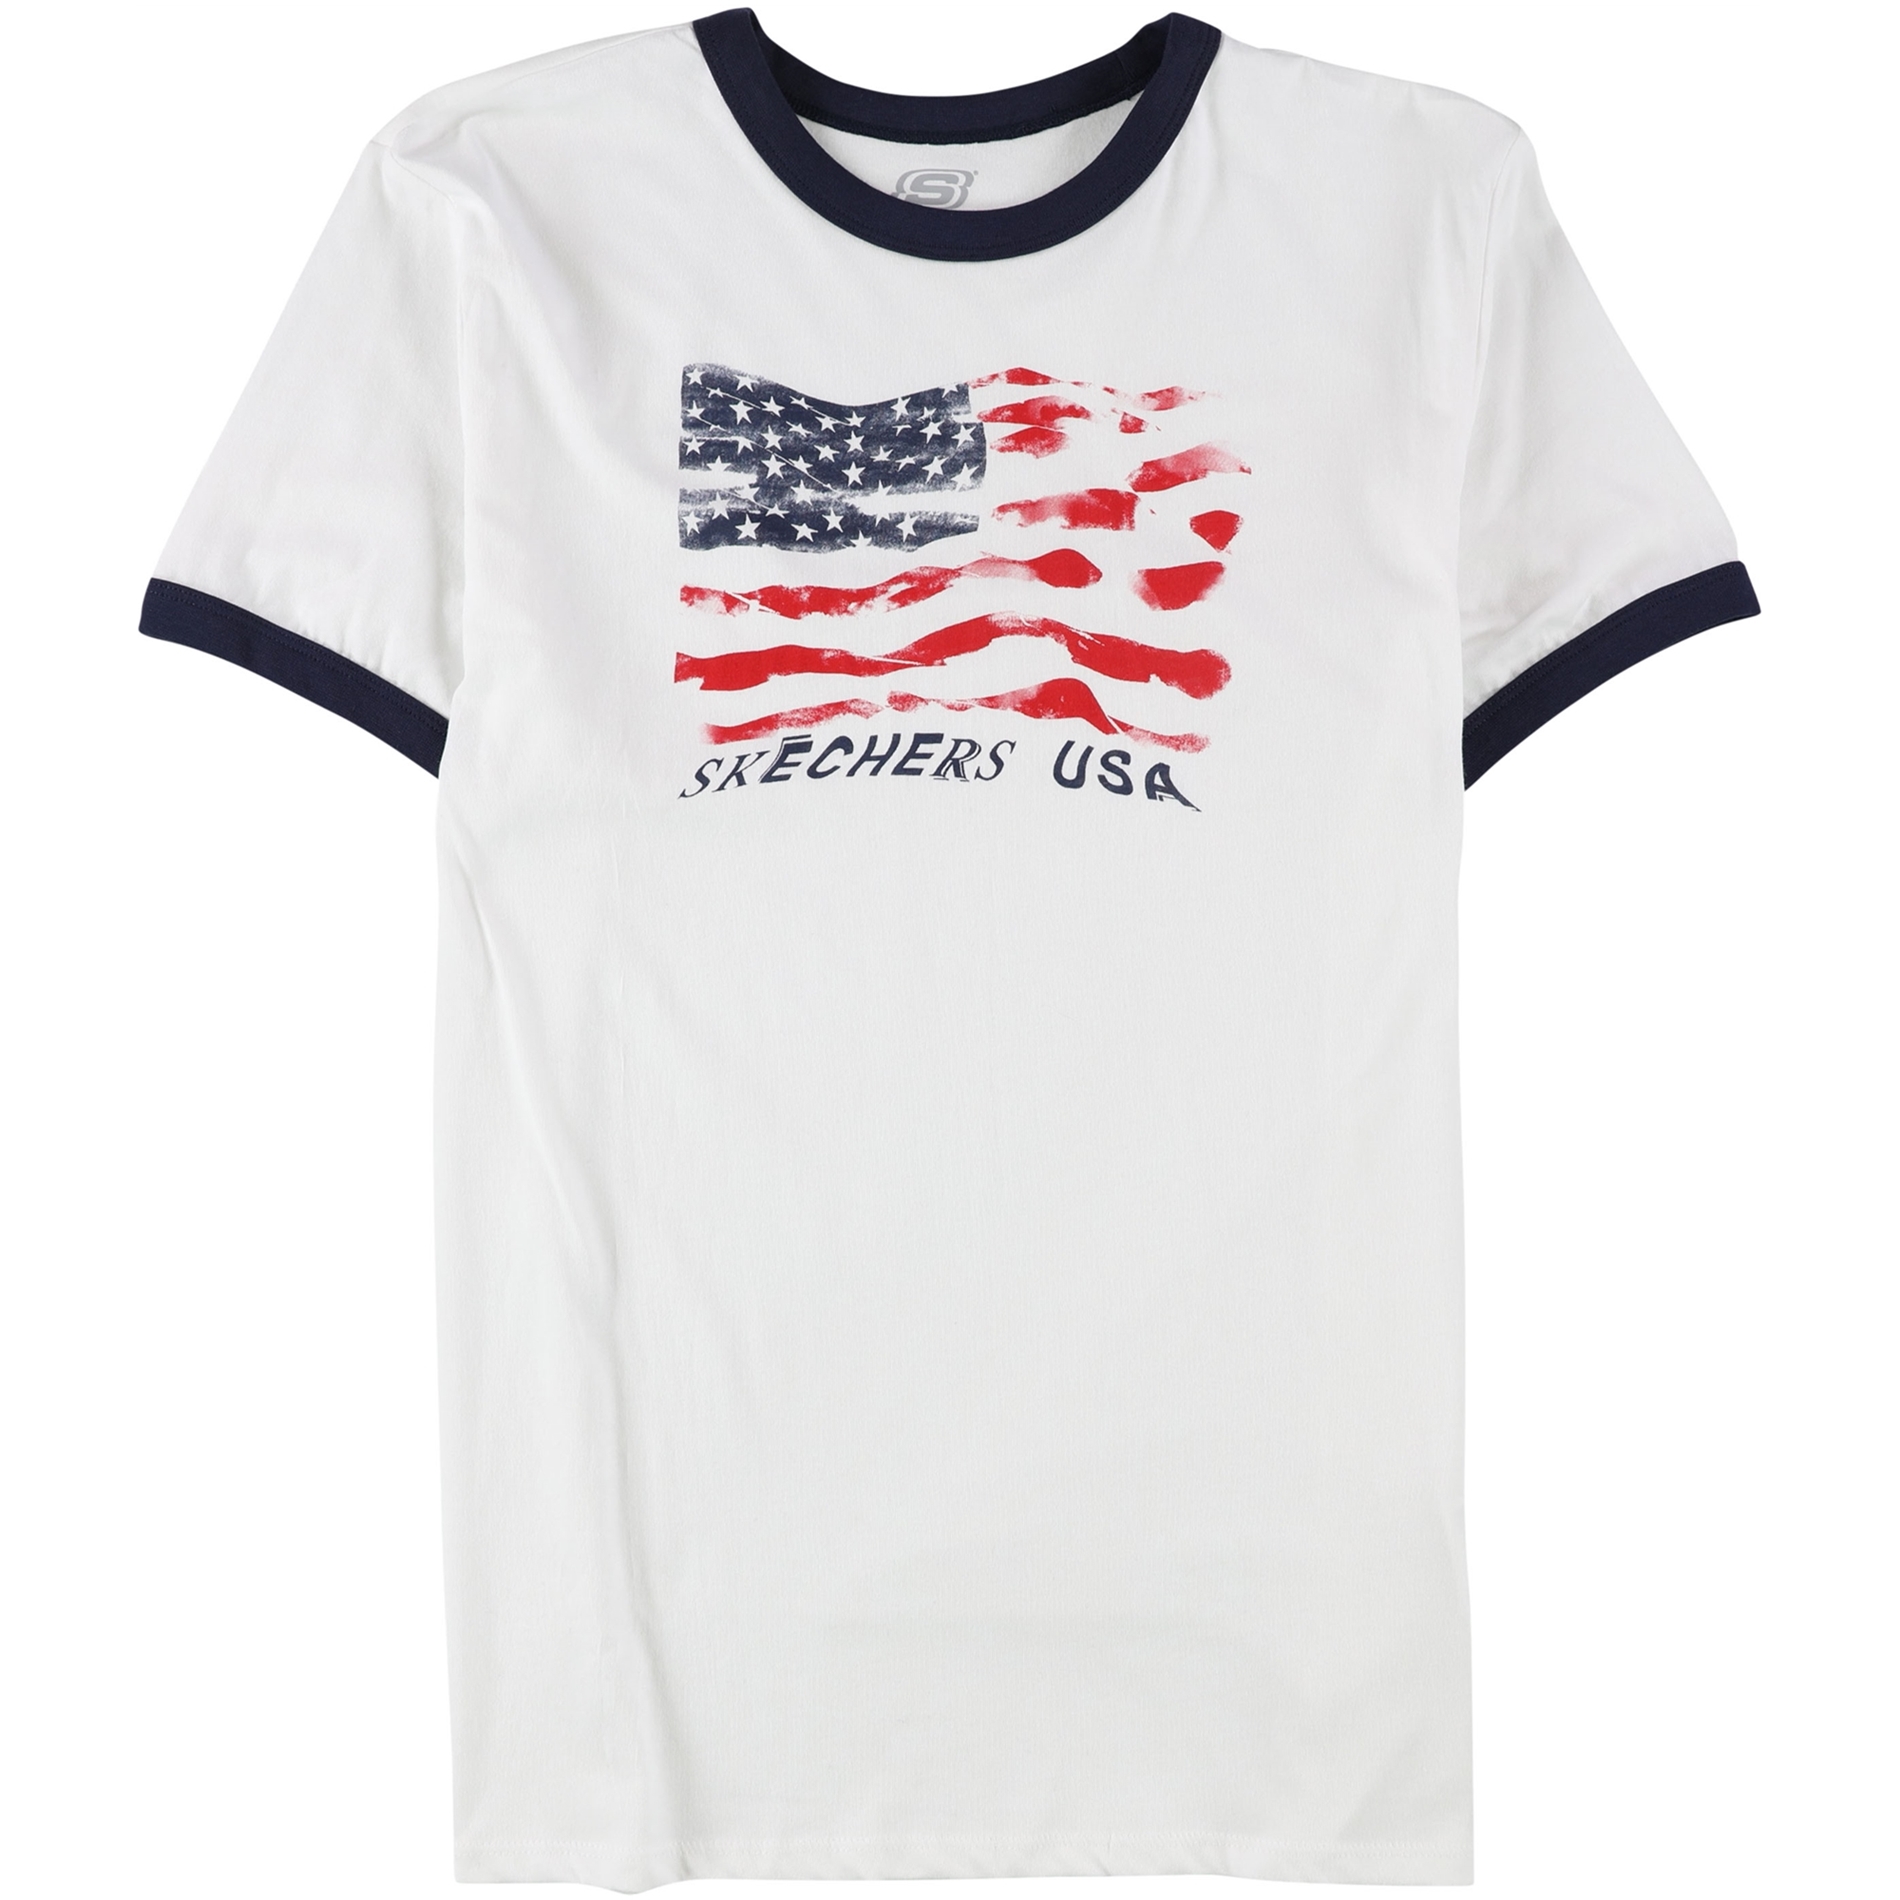 Skechers Womens Wavy Flag Ringer Graphic T-Shirt